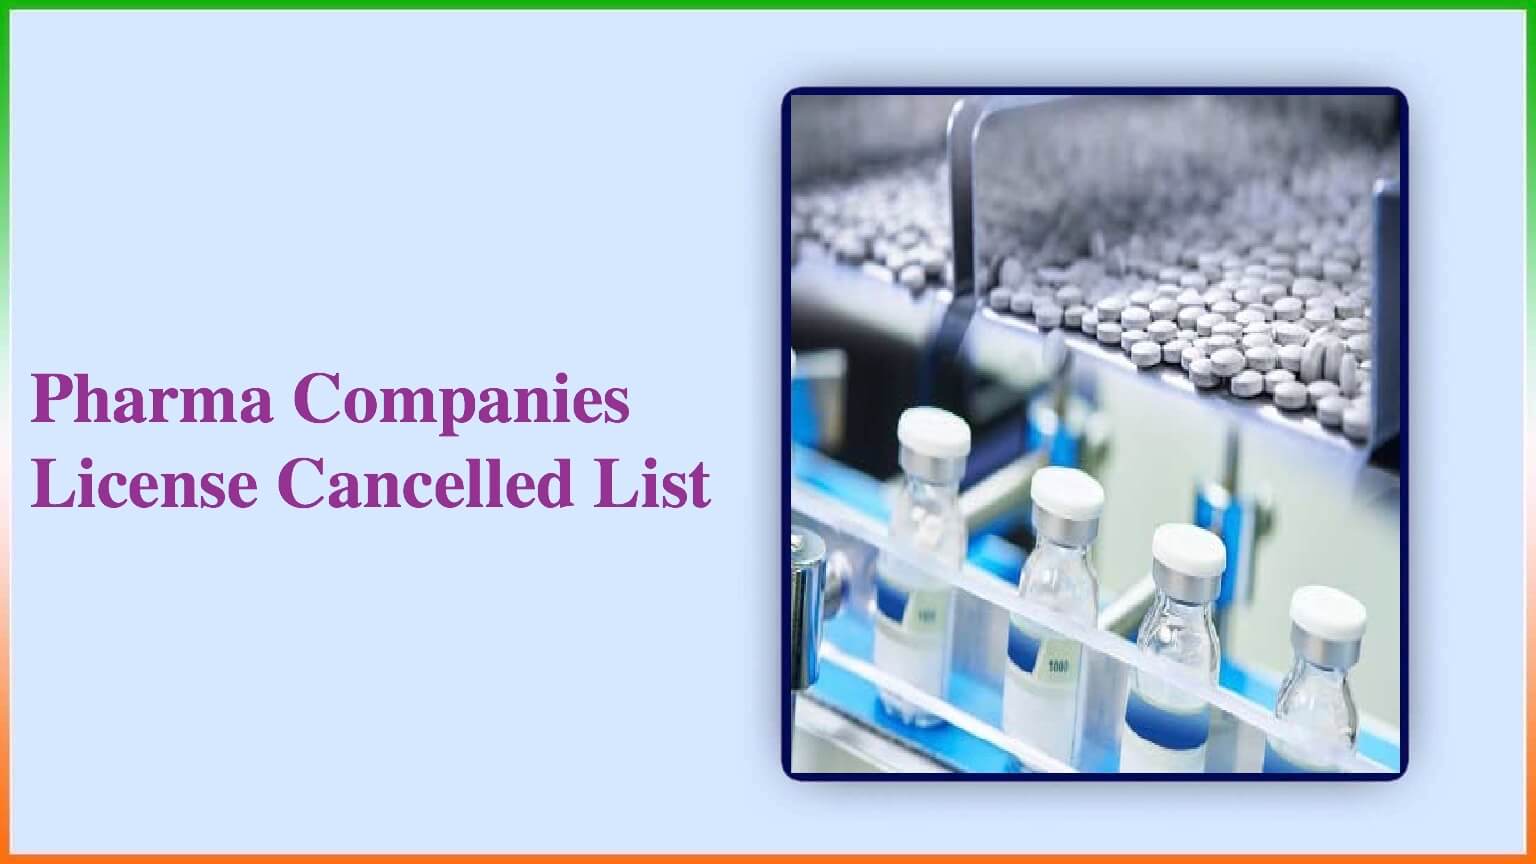 18 Pharma Companies License Cancelled List